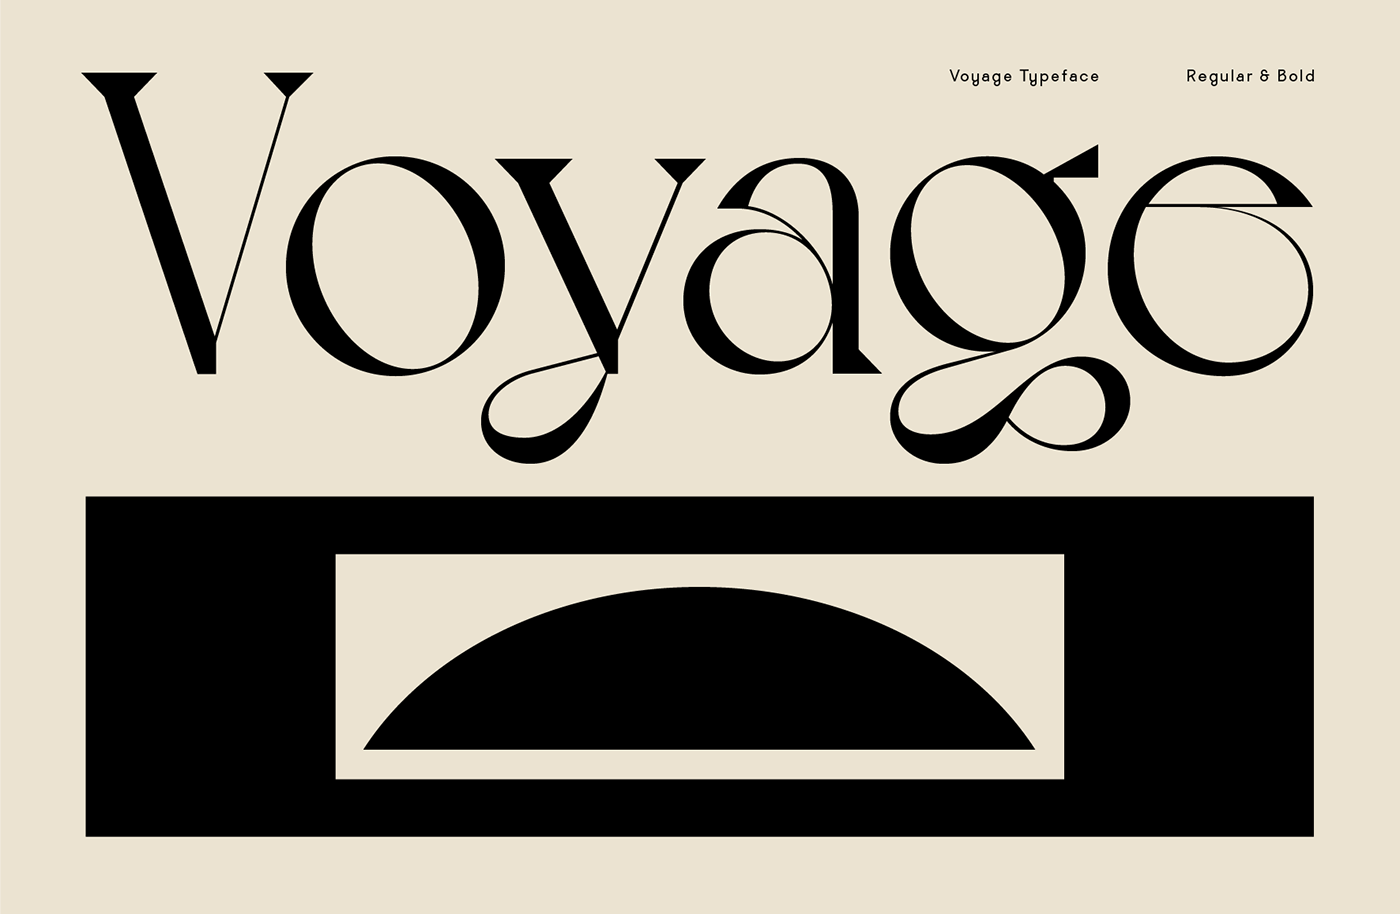 alternate font ligature Photography  Travel type typography   Violaine & Jeremy vj-type voyage